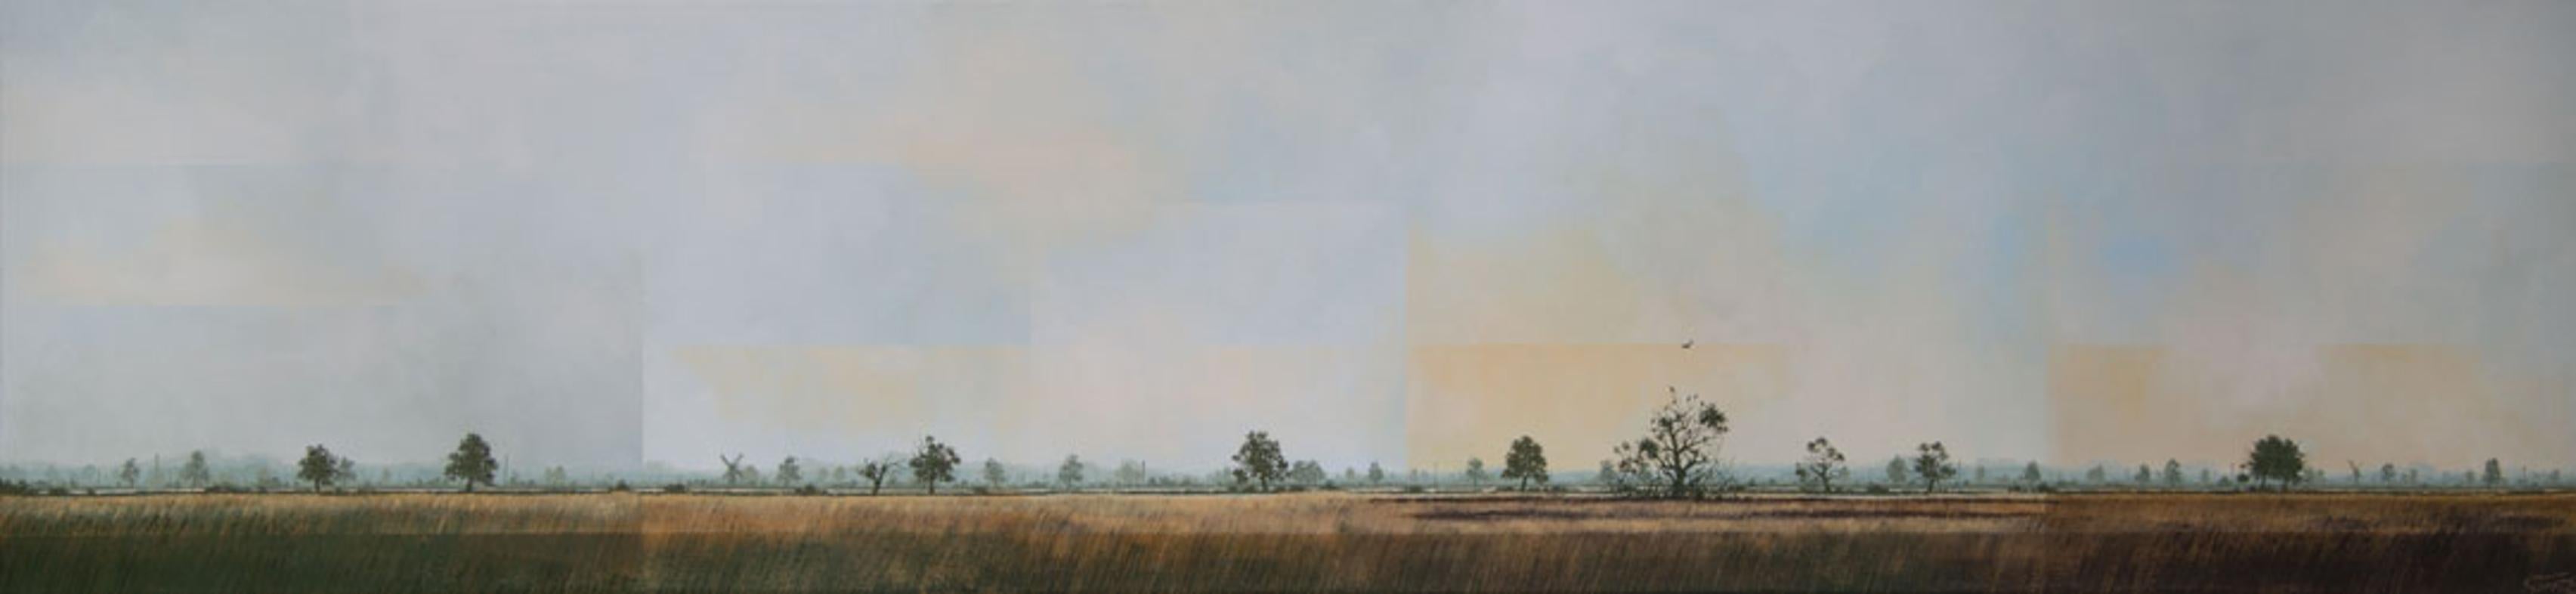 Glynne James Landscape Painting - Broadland Roost - Contemporary Rural Landscape: Oil on Canvas